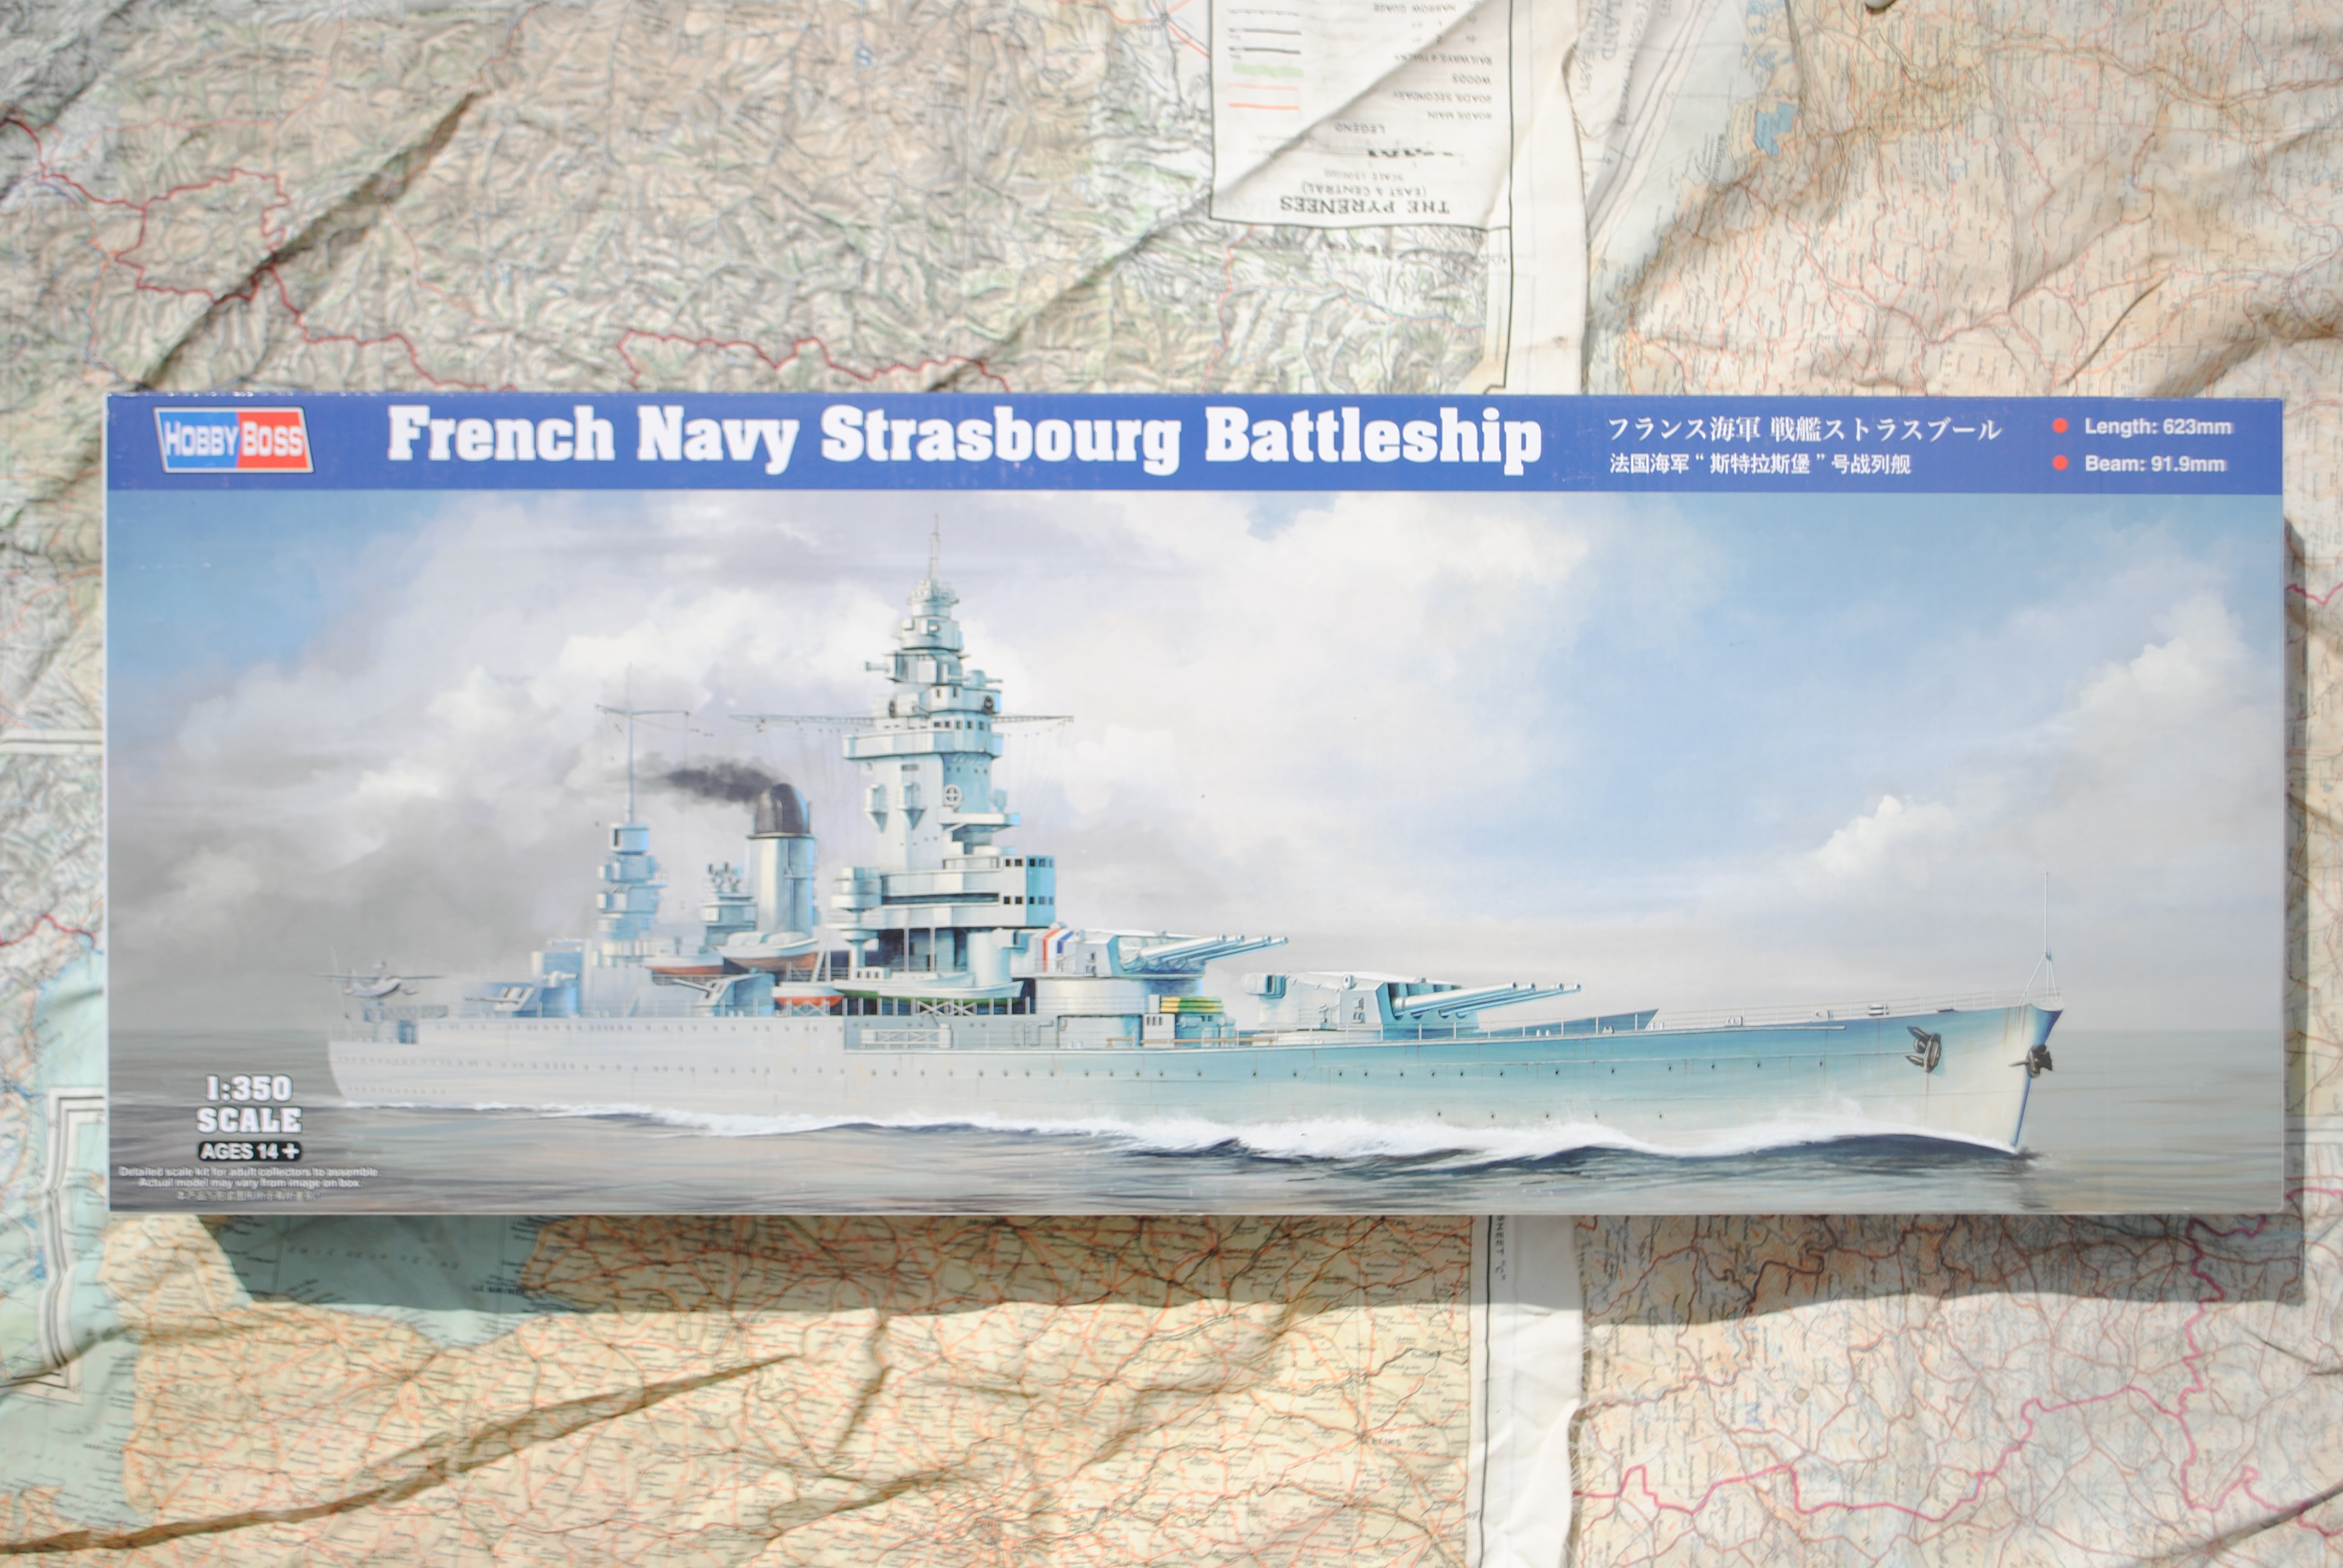 Hobby Boss 86507 French Navy Strasbourg Battleship